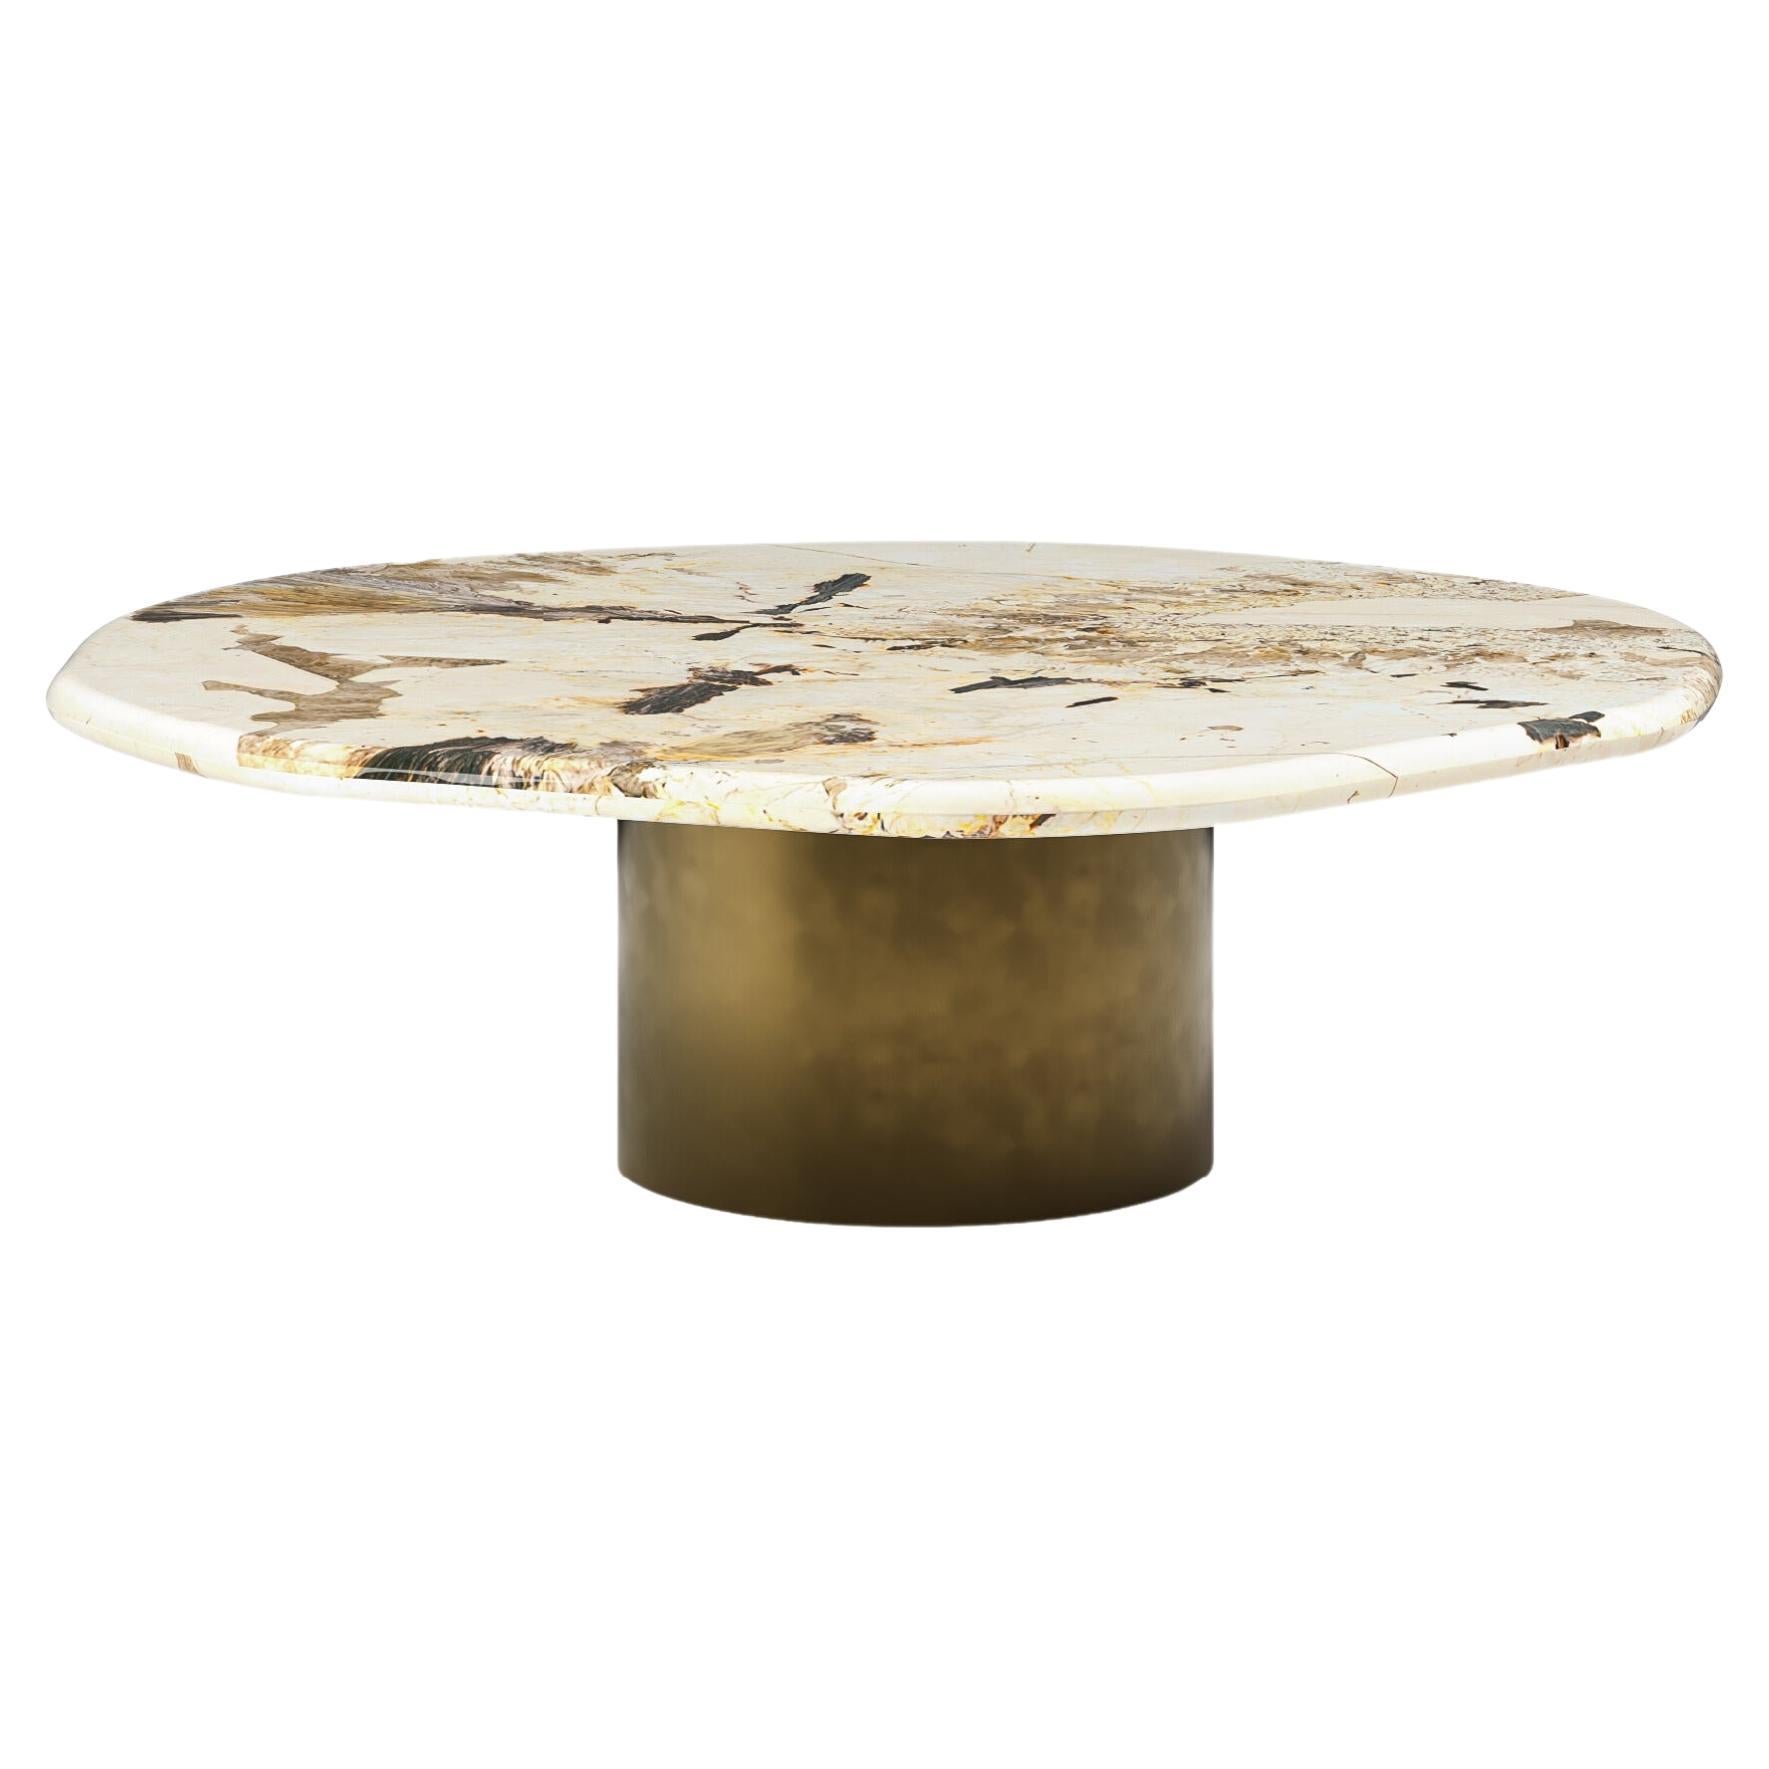 FORM(LA) Lago Round Coffee Table 48”L x 48”W x 14”H Quartzite & Antique Bronze For Sale